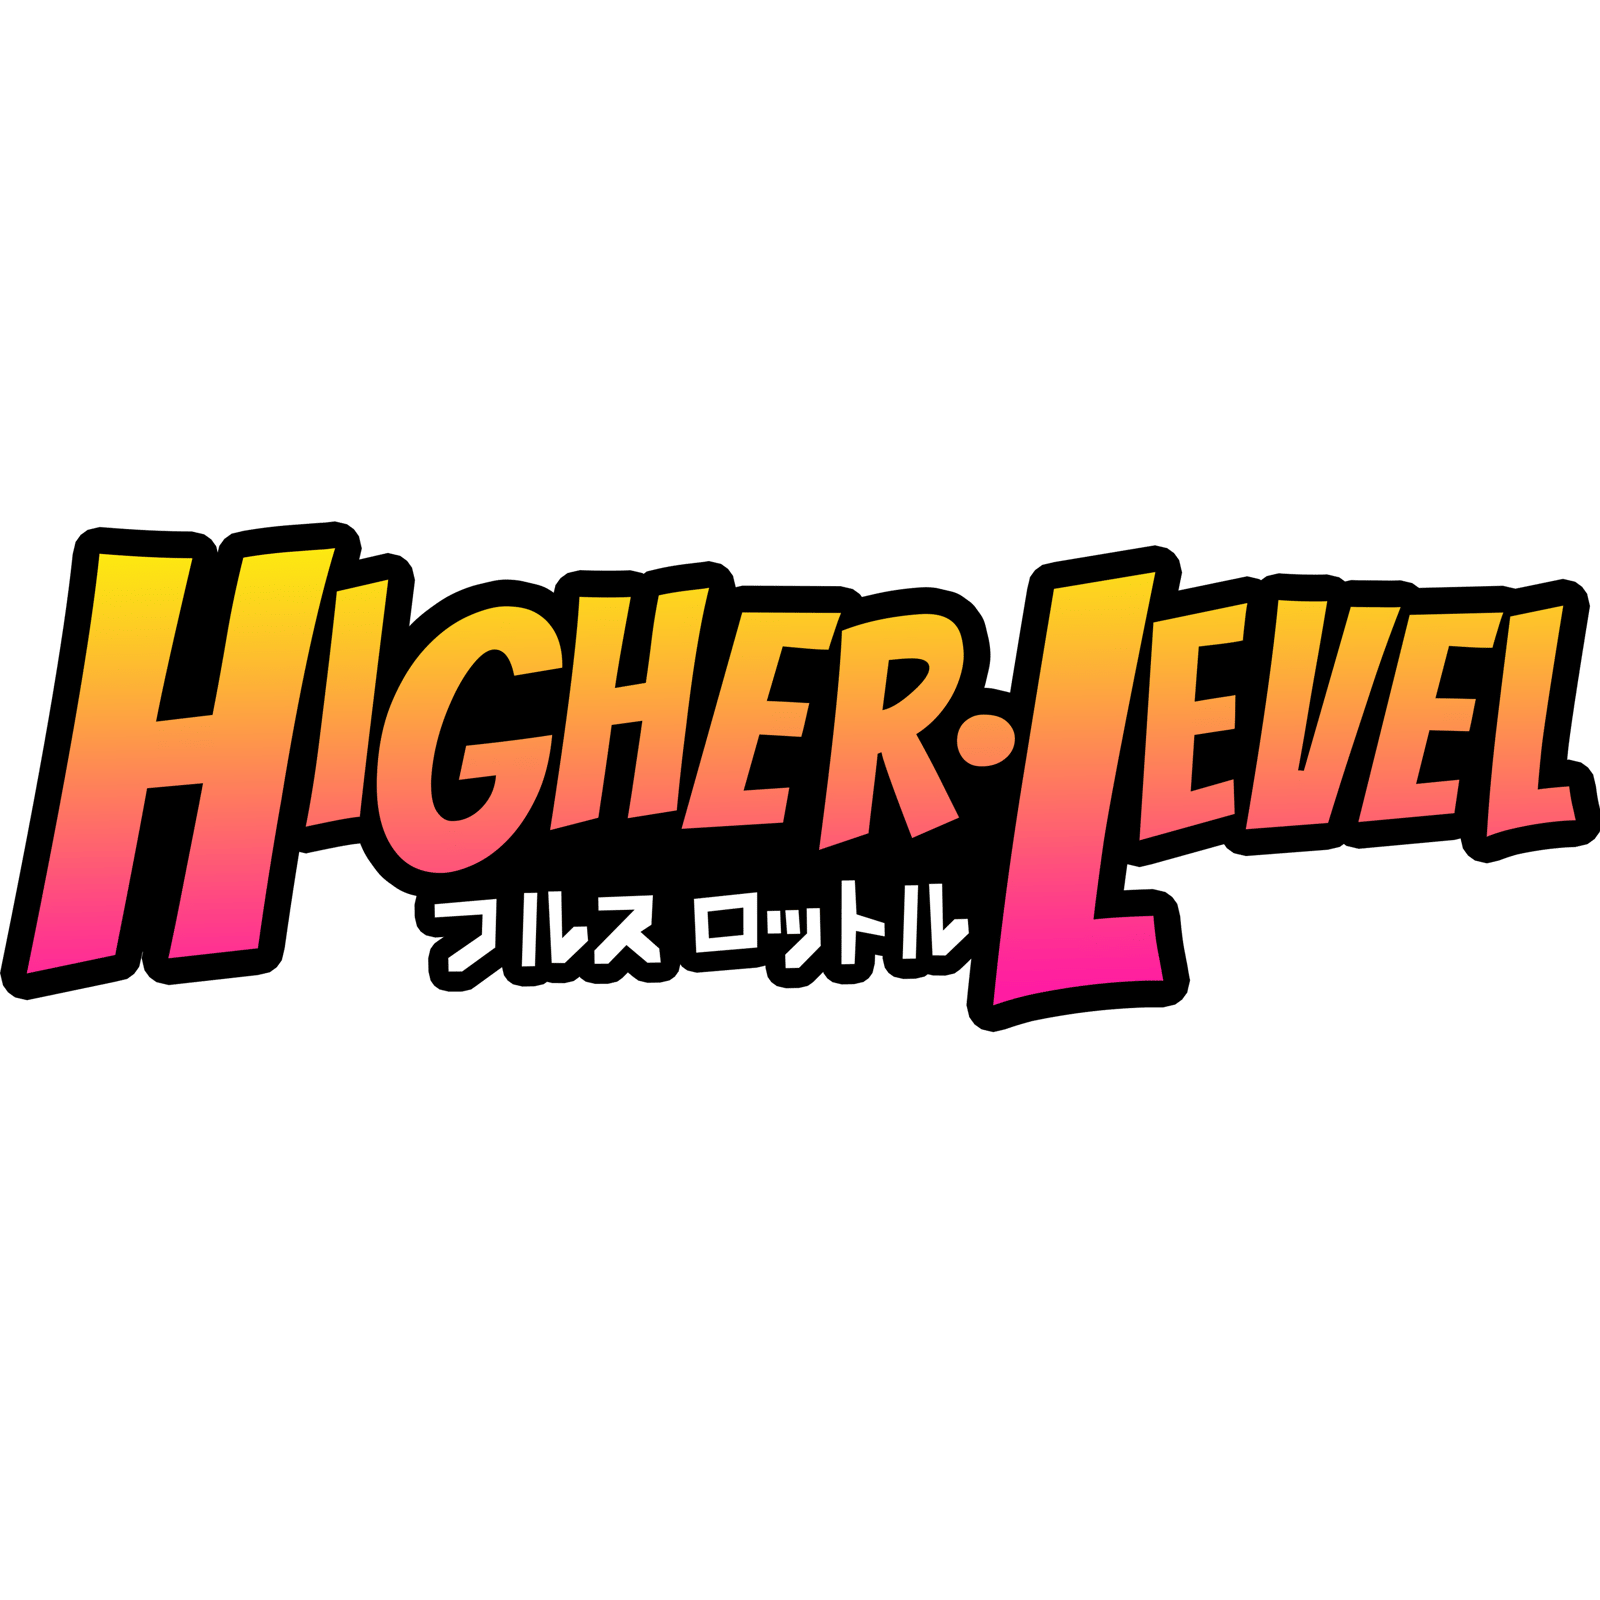 Higher.Level